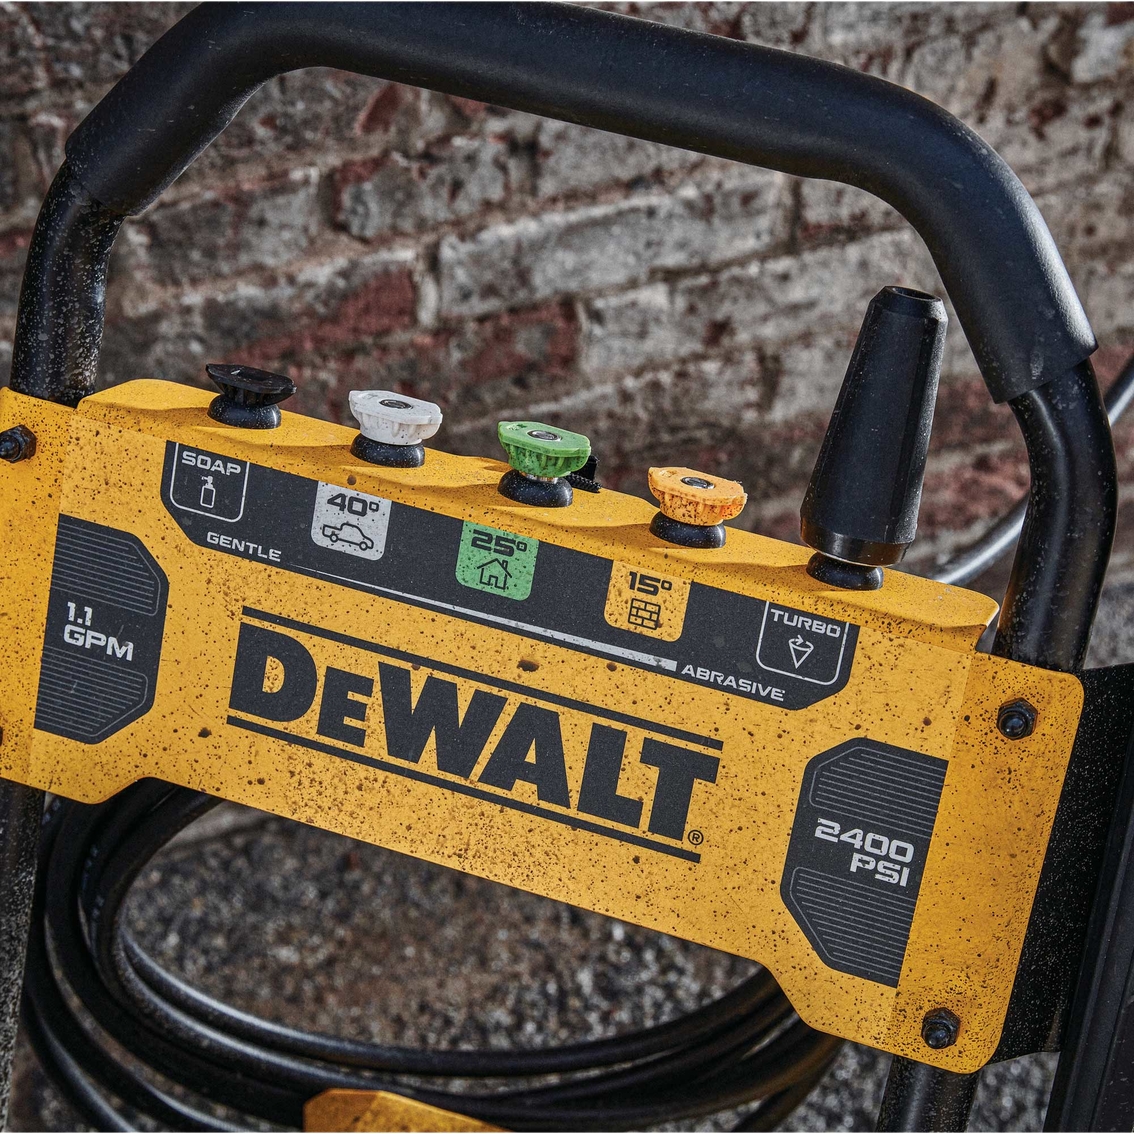  DEWALT Electric Pressure Washer, Cold Water, 2400-PSI,  1.1-GPM, Corded (DWPW2400) : Patio, Lawn & Garden